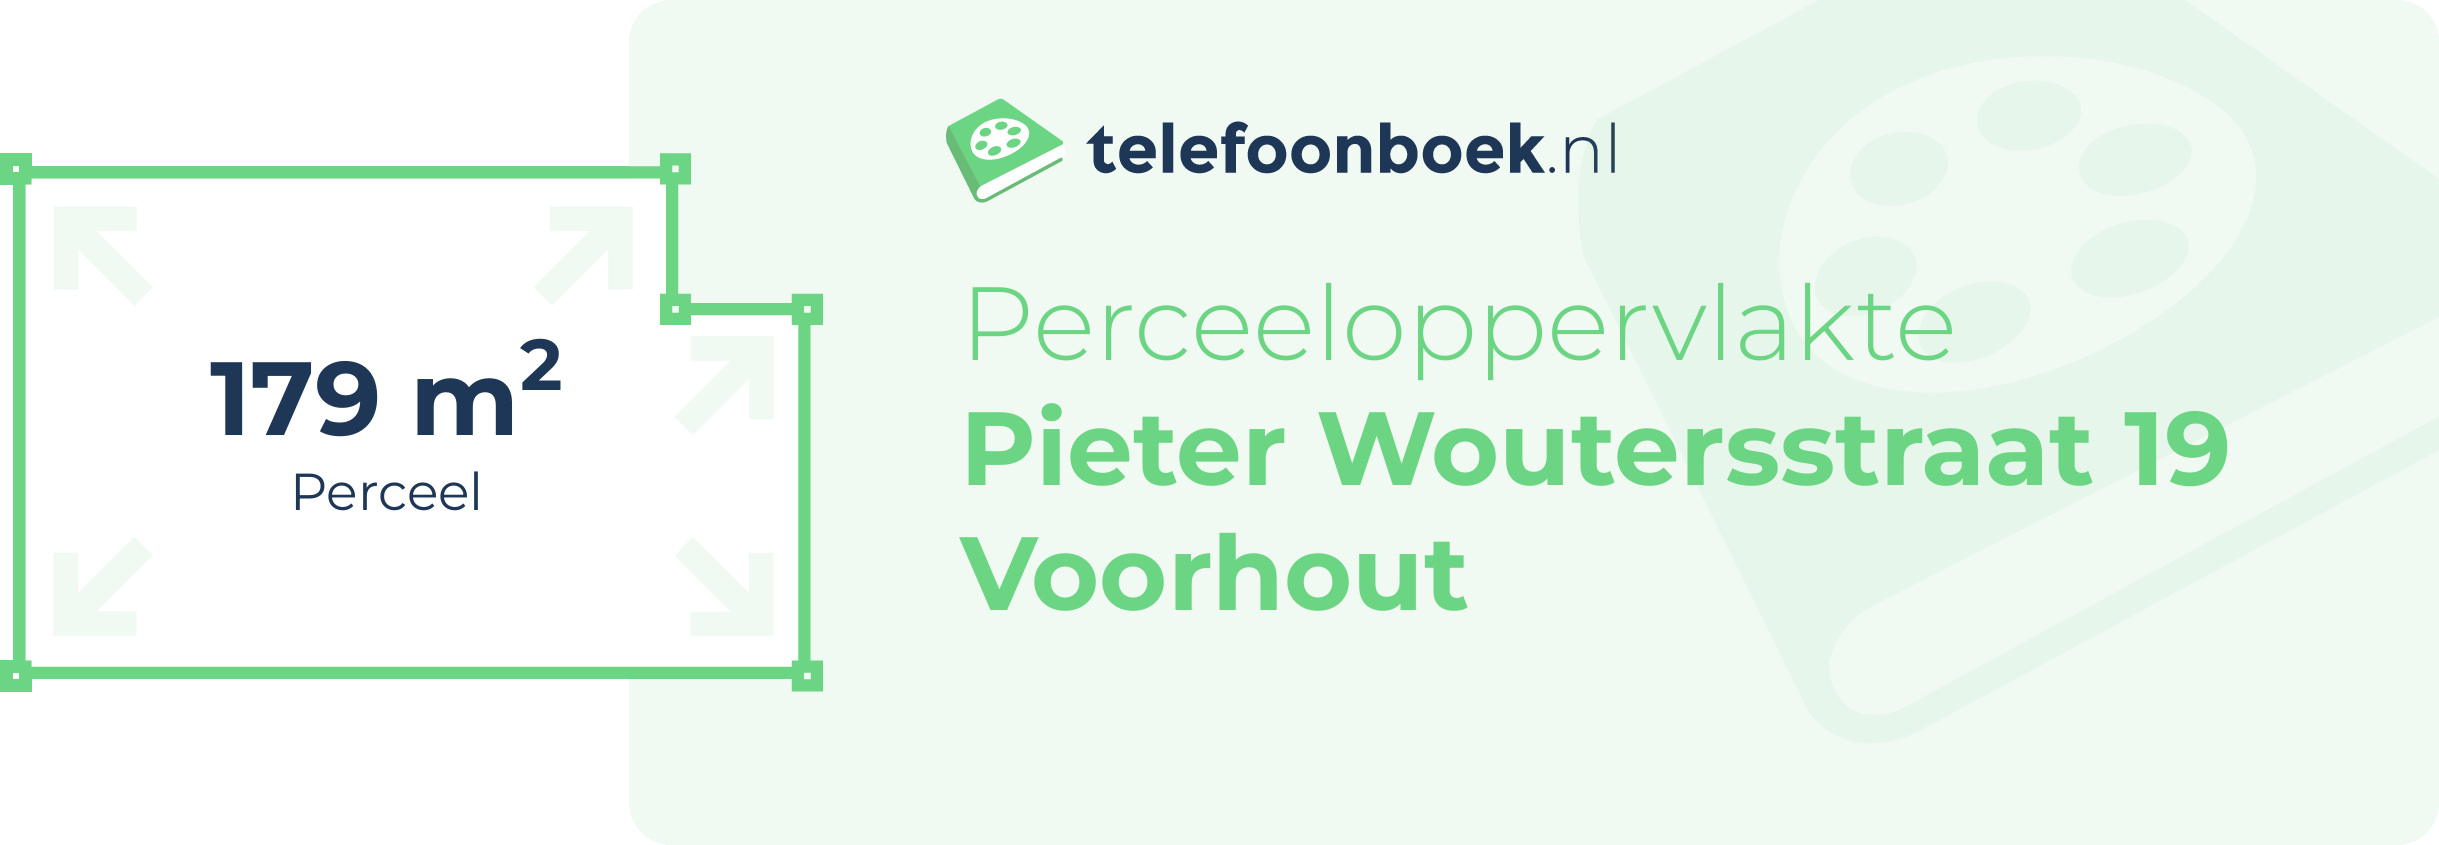 Perceeloppervlakte Pieter Woutersstraat 19 Voorhout